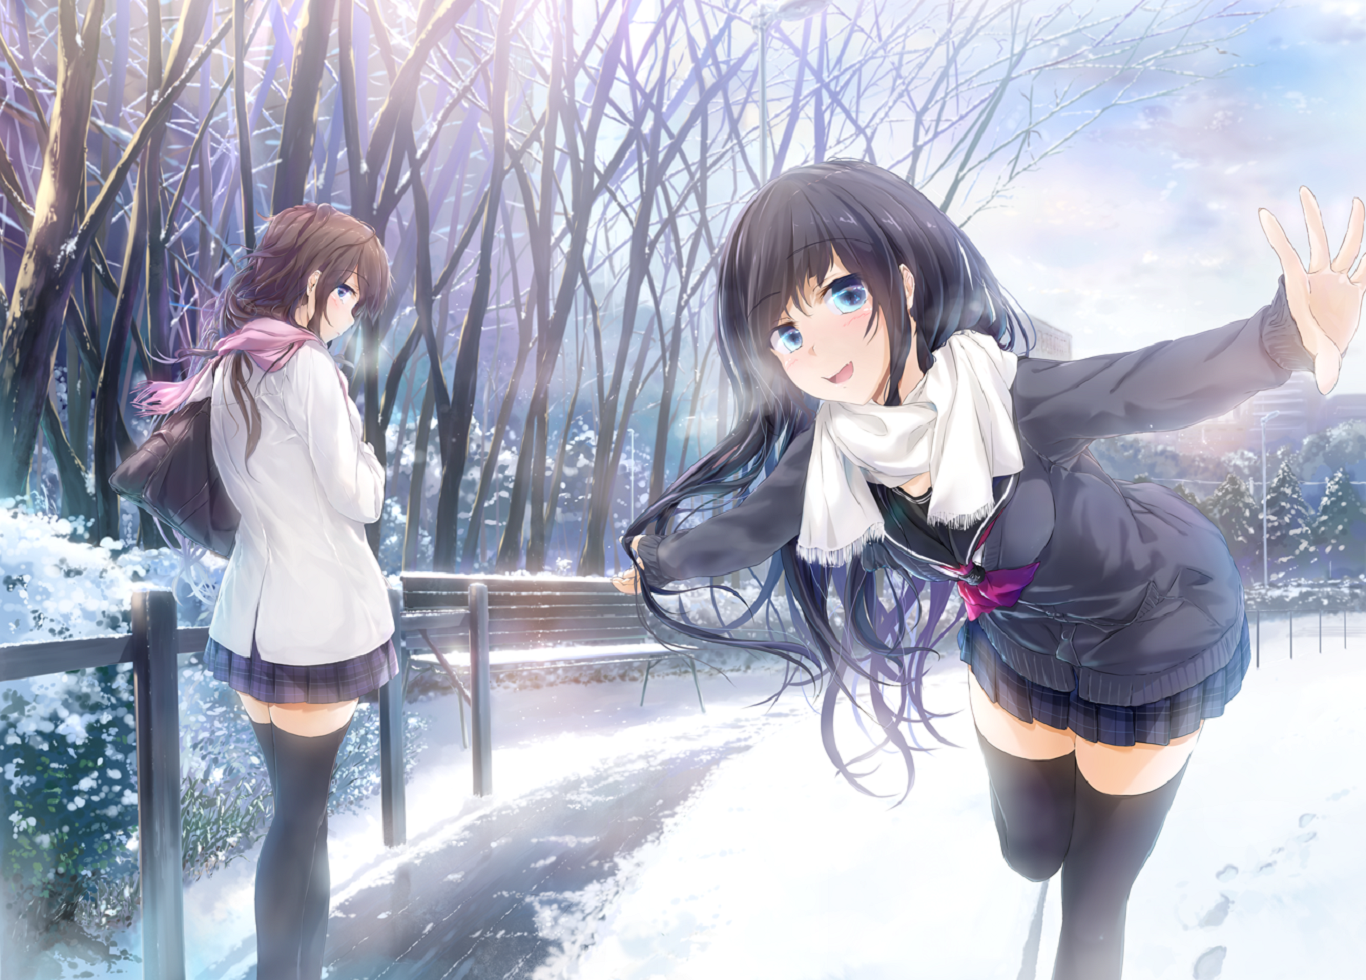 Anime 1366x980 anime girls anime original characters snow two women winter cold ice aqua eyes stockings black stockings long hair dark hair